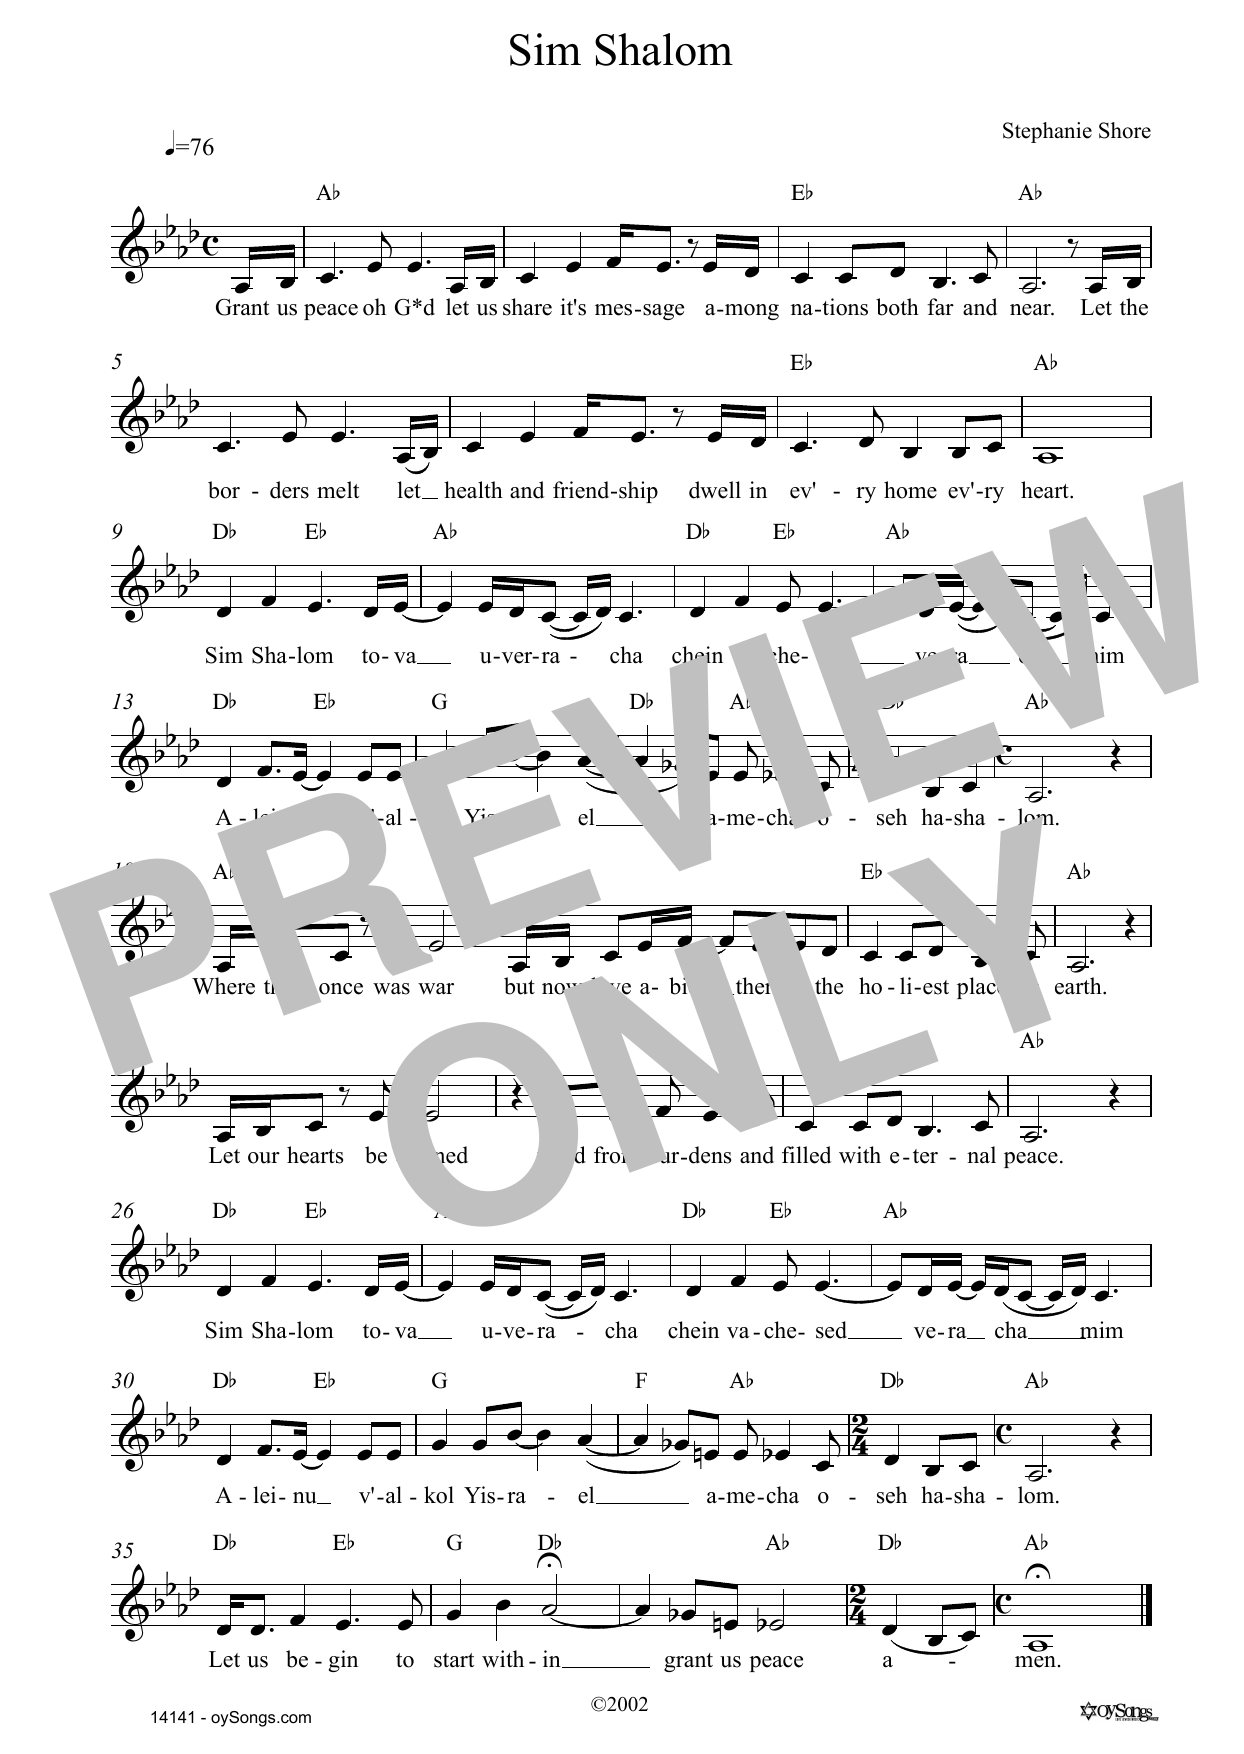 Stephanie Shore Sim Shalom sheet music notes and chords arranged for Lead Sheet / Fake Book